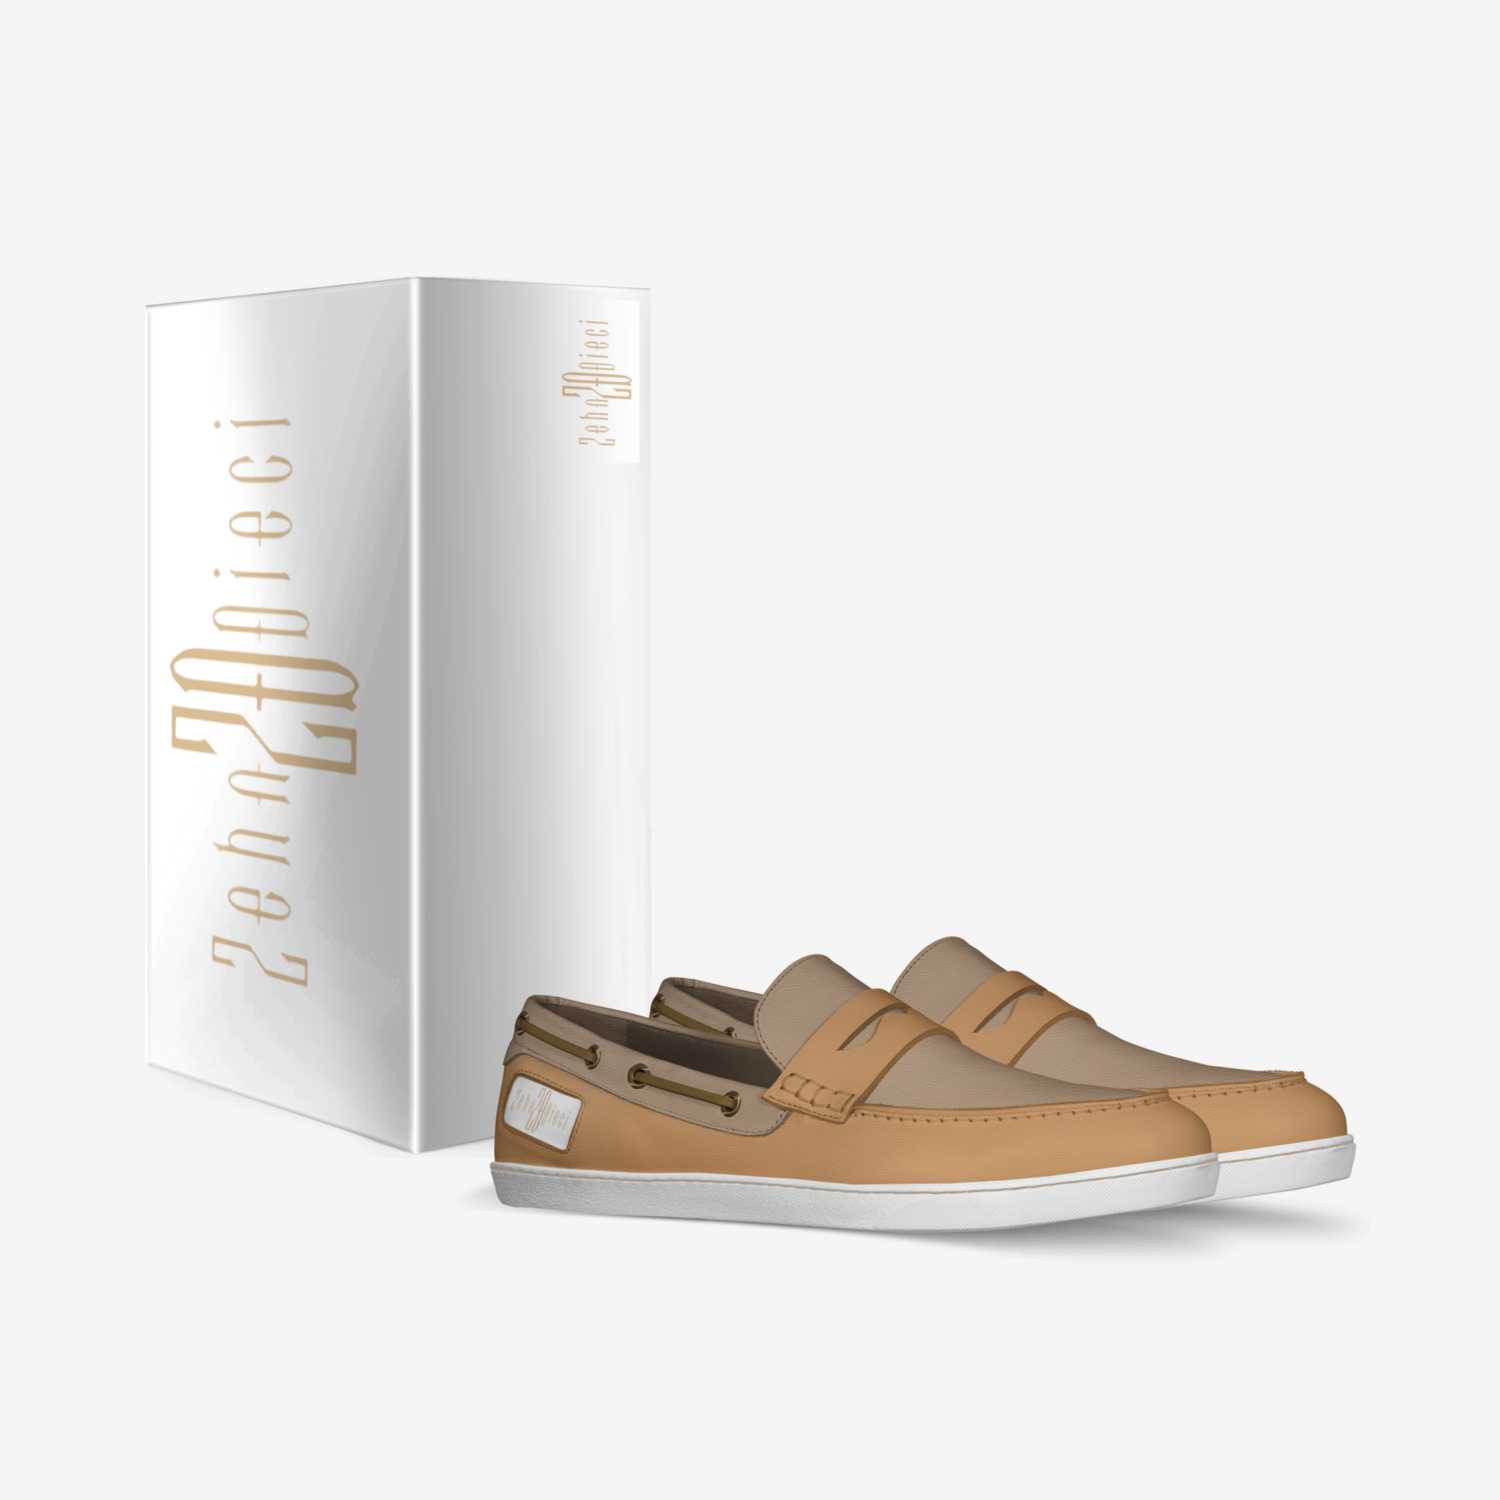 Karanga custom made in Italy shoes by Zehn Dieci | Box view